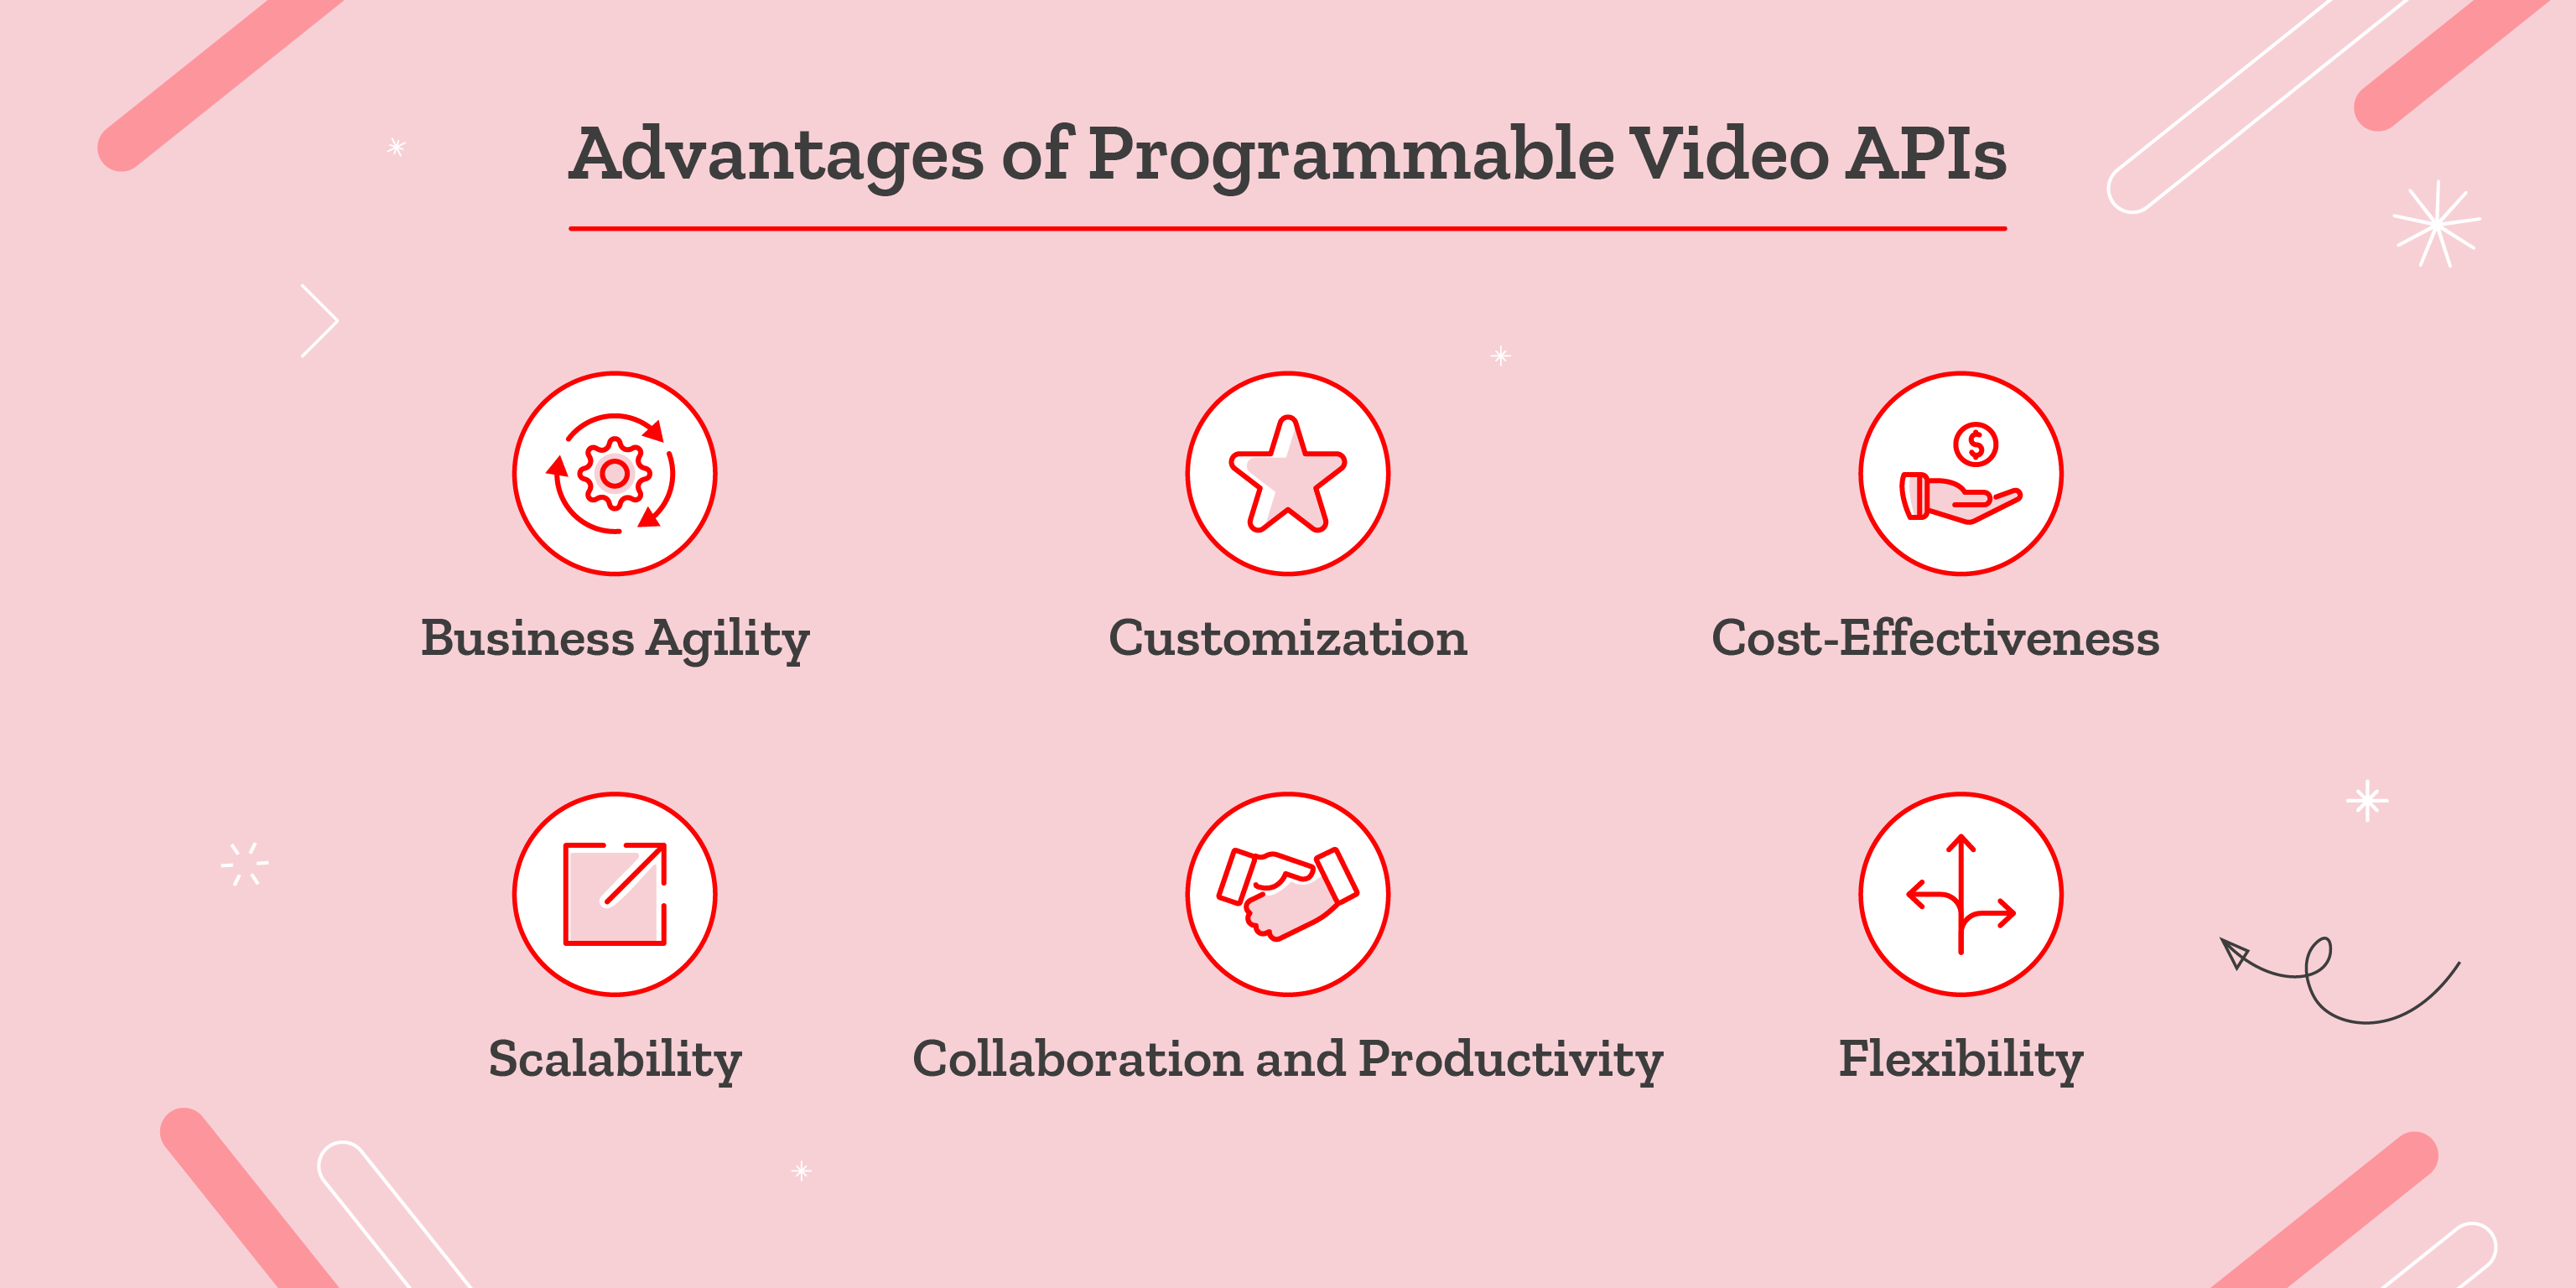 Benefits of programmable video APIs